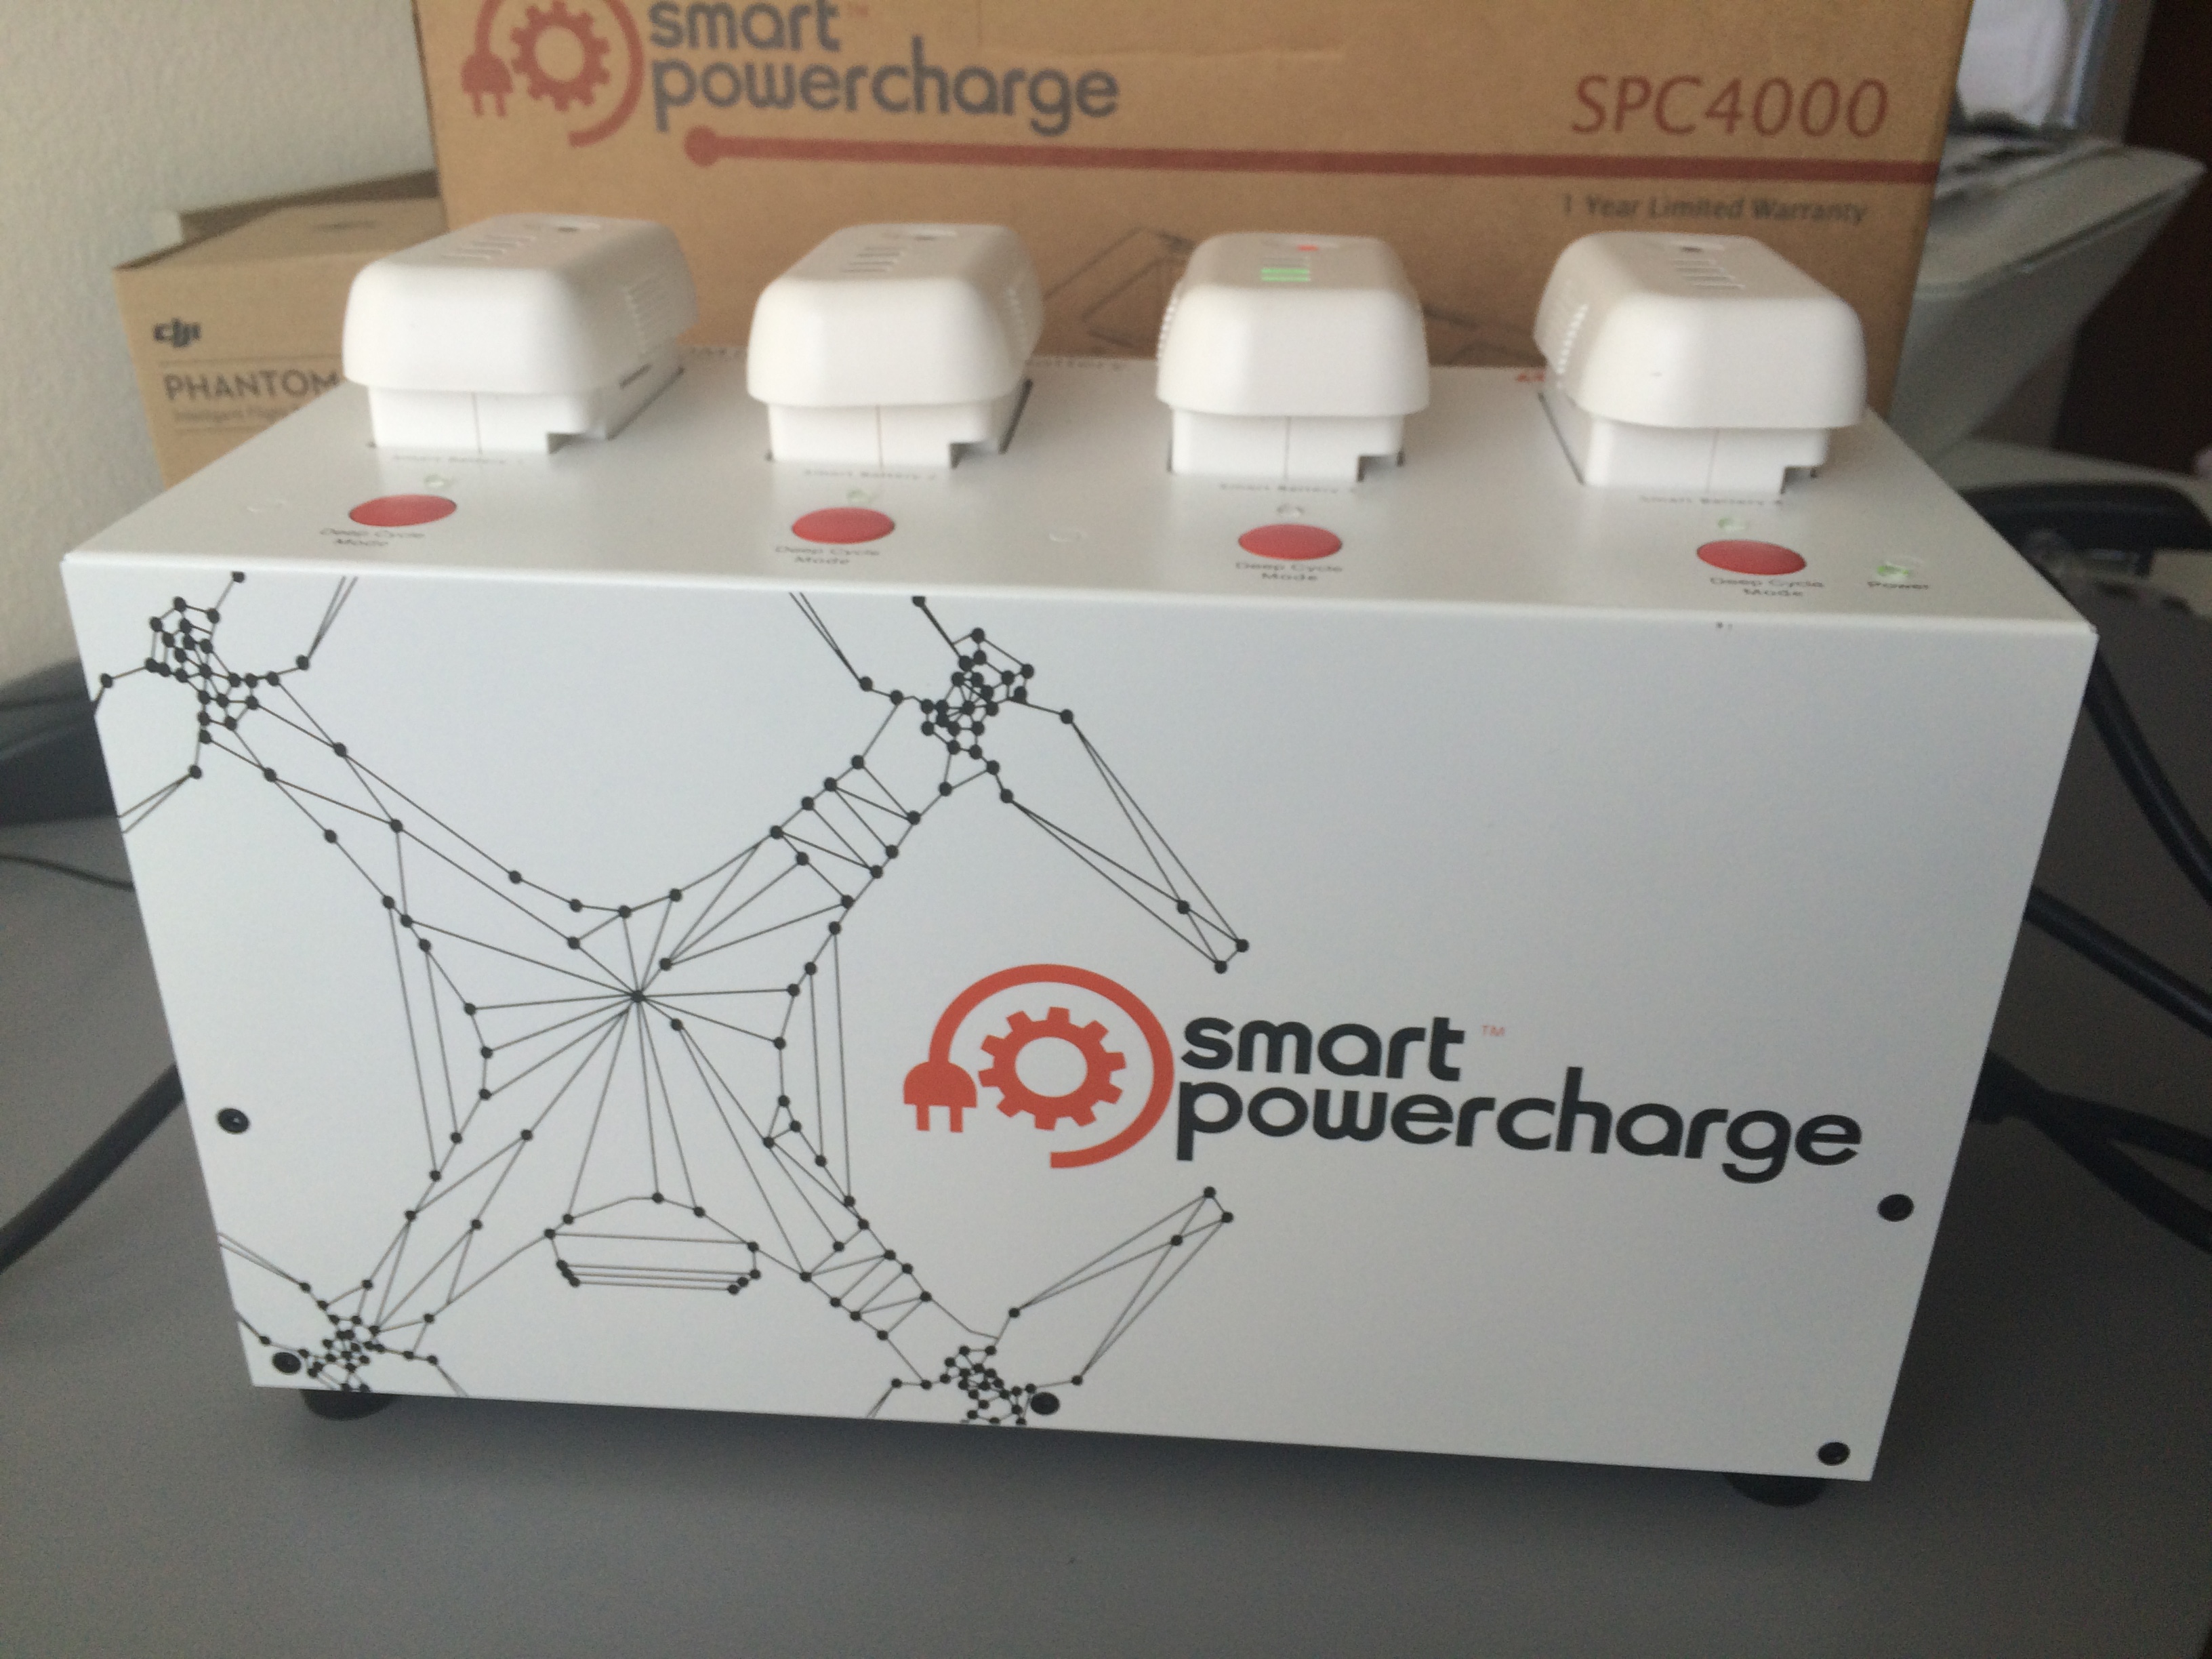 DJI Phantom 2 Charging Station Review - Smart Powercharge SPC 4000